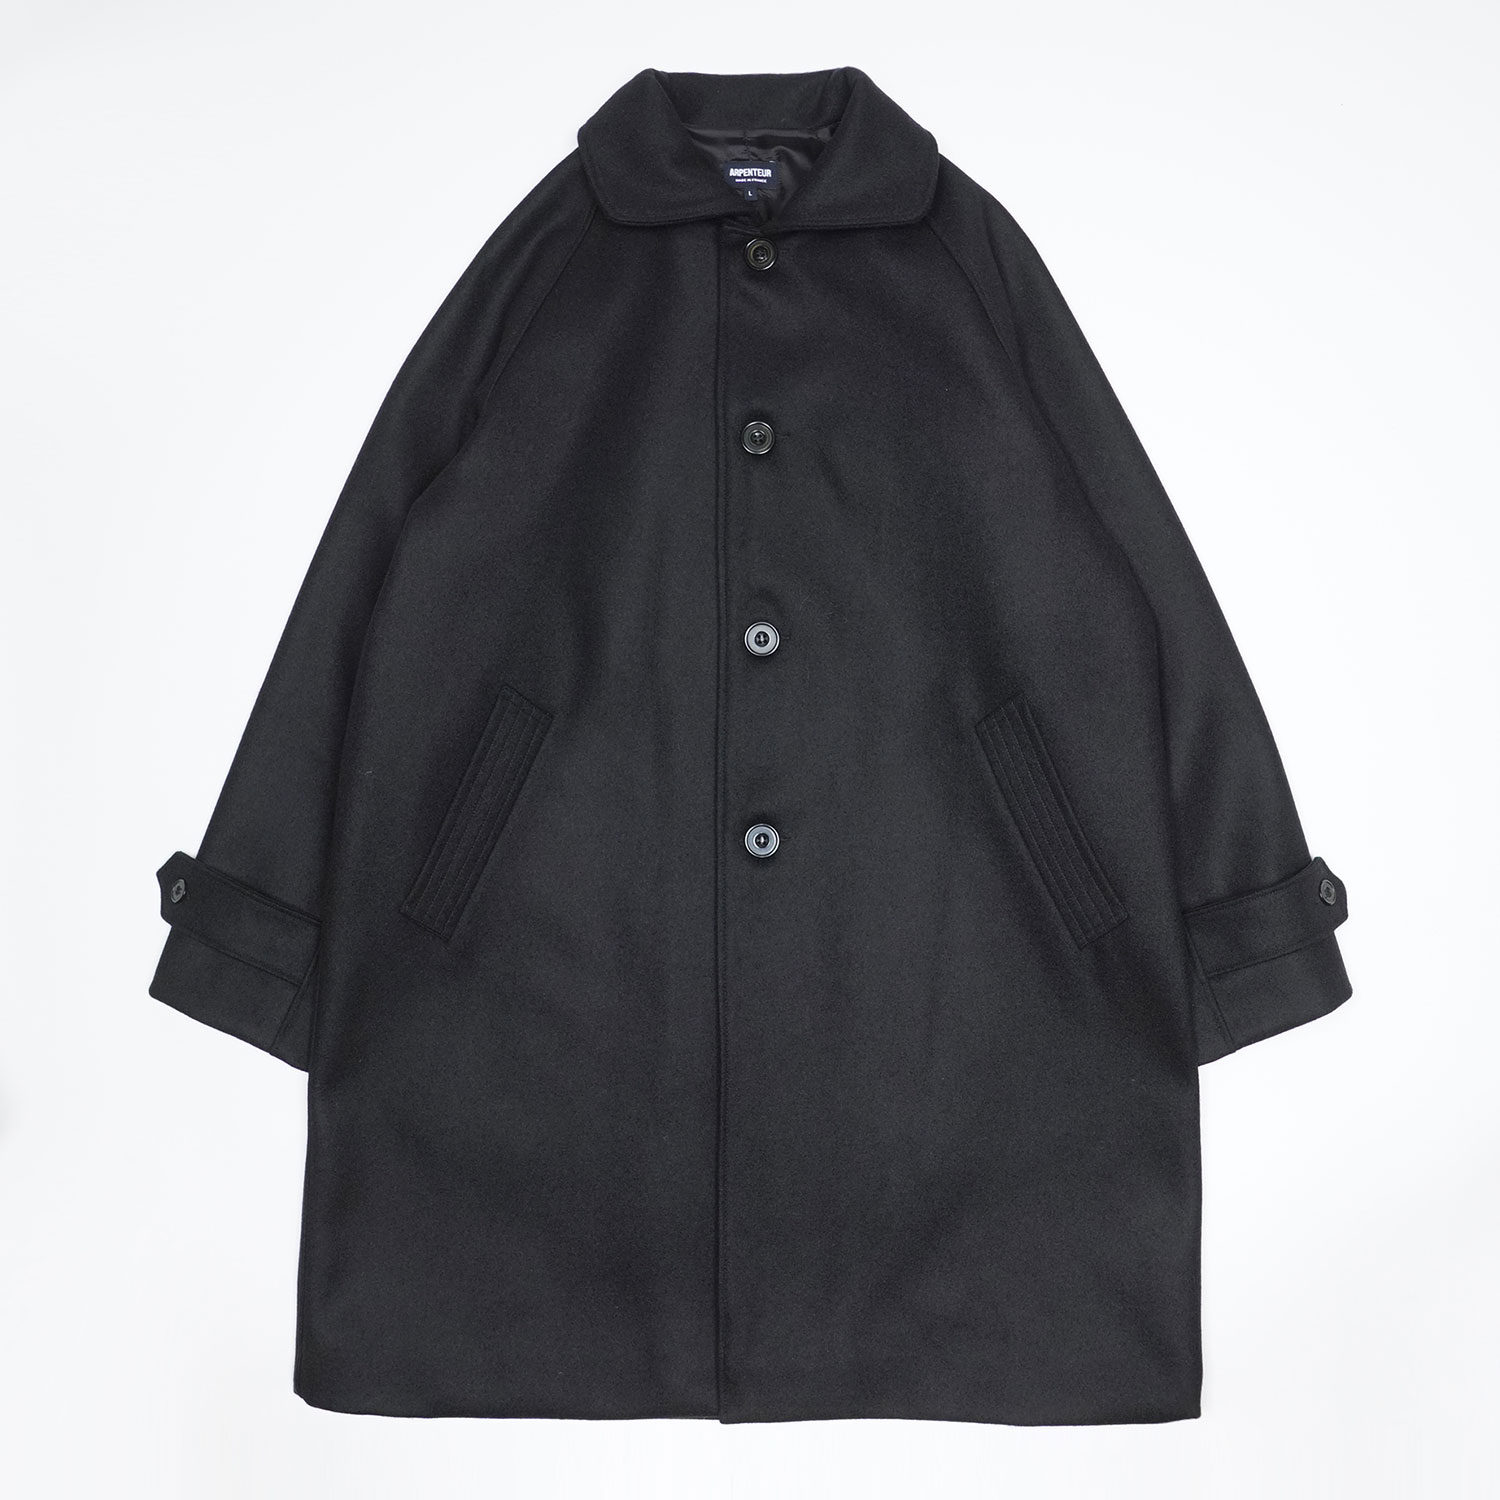 UTILE W coat in Black color by Arpenteur